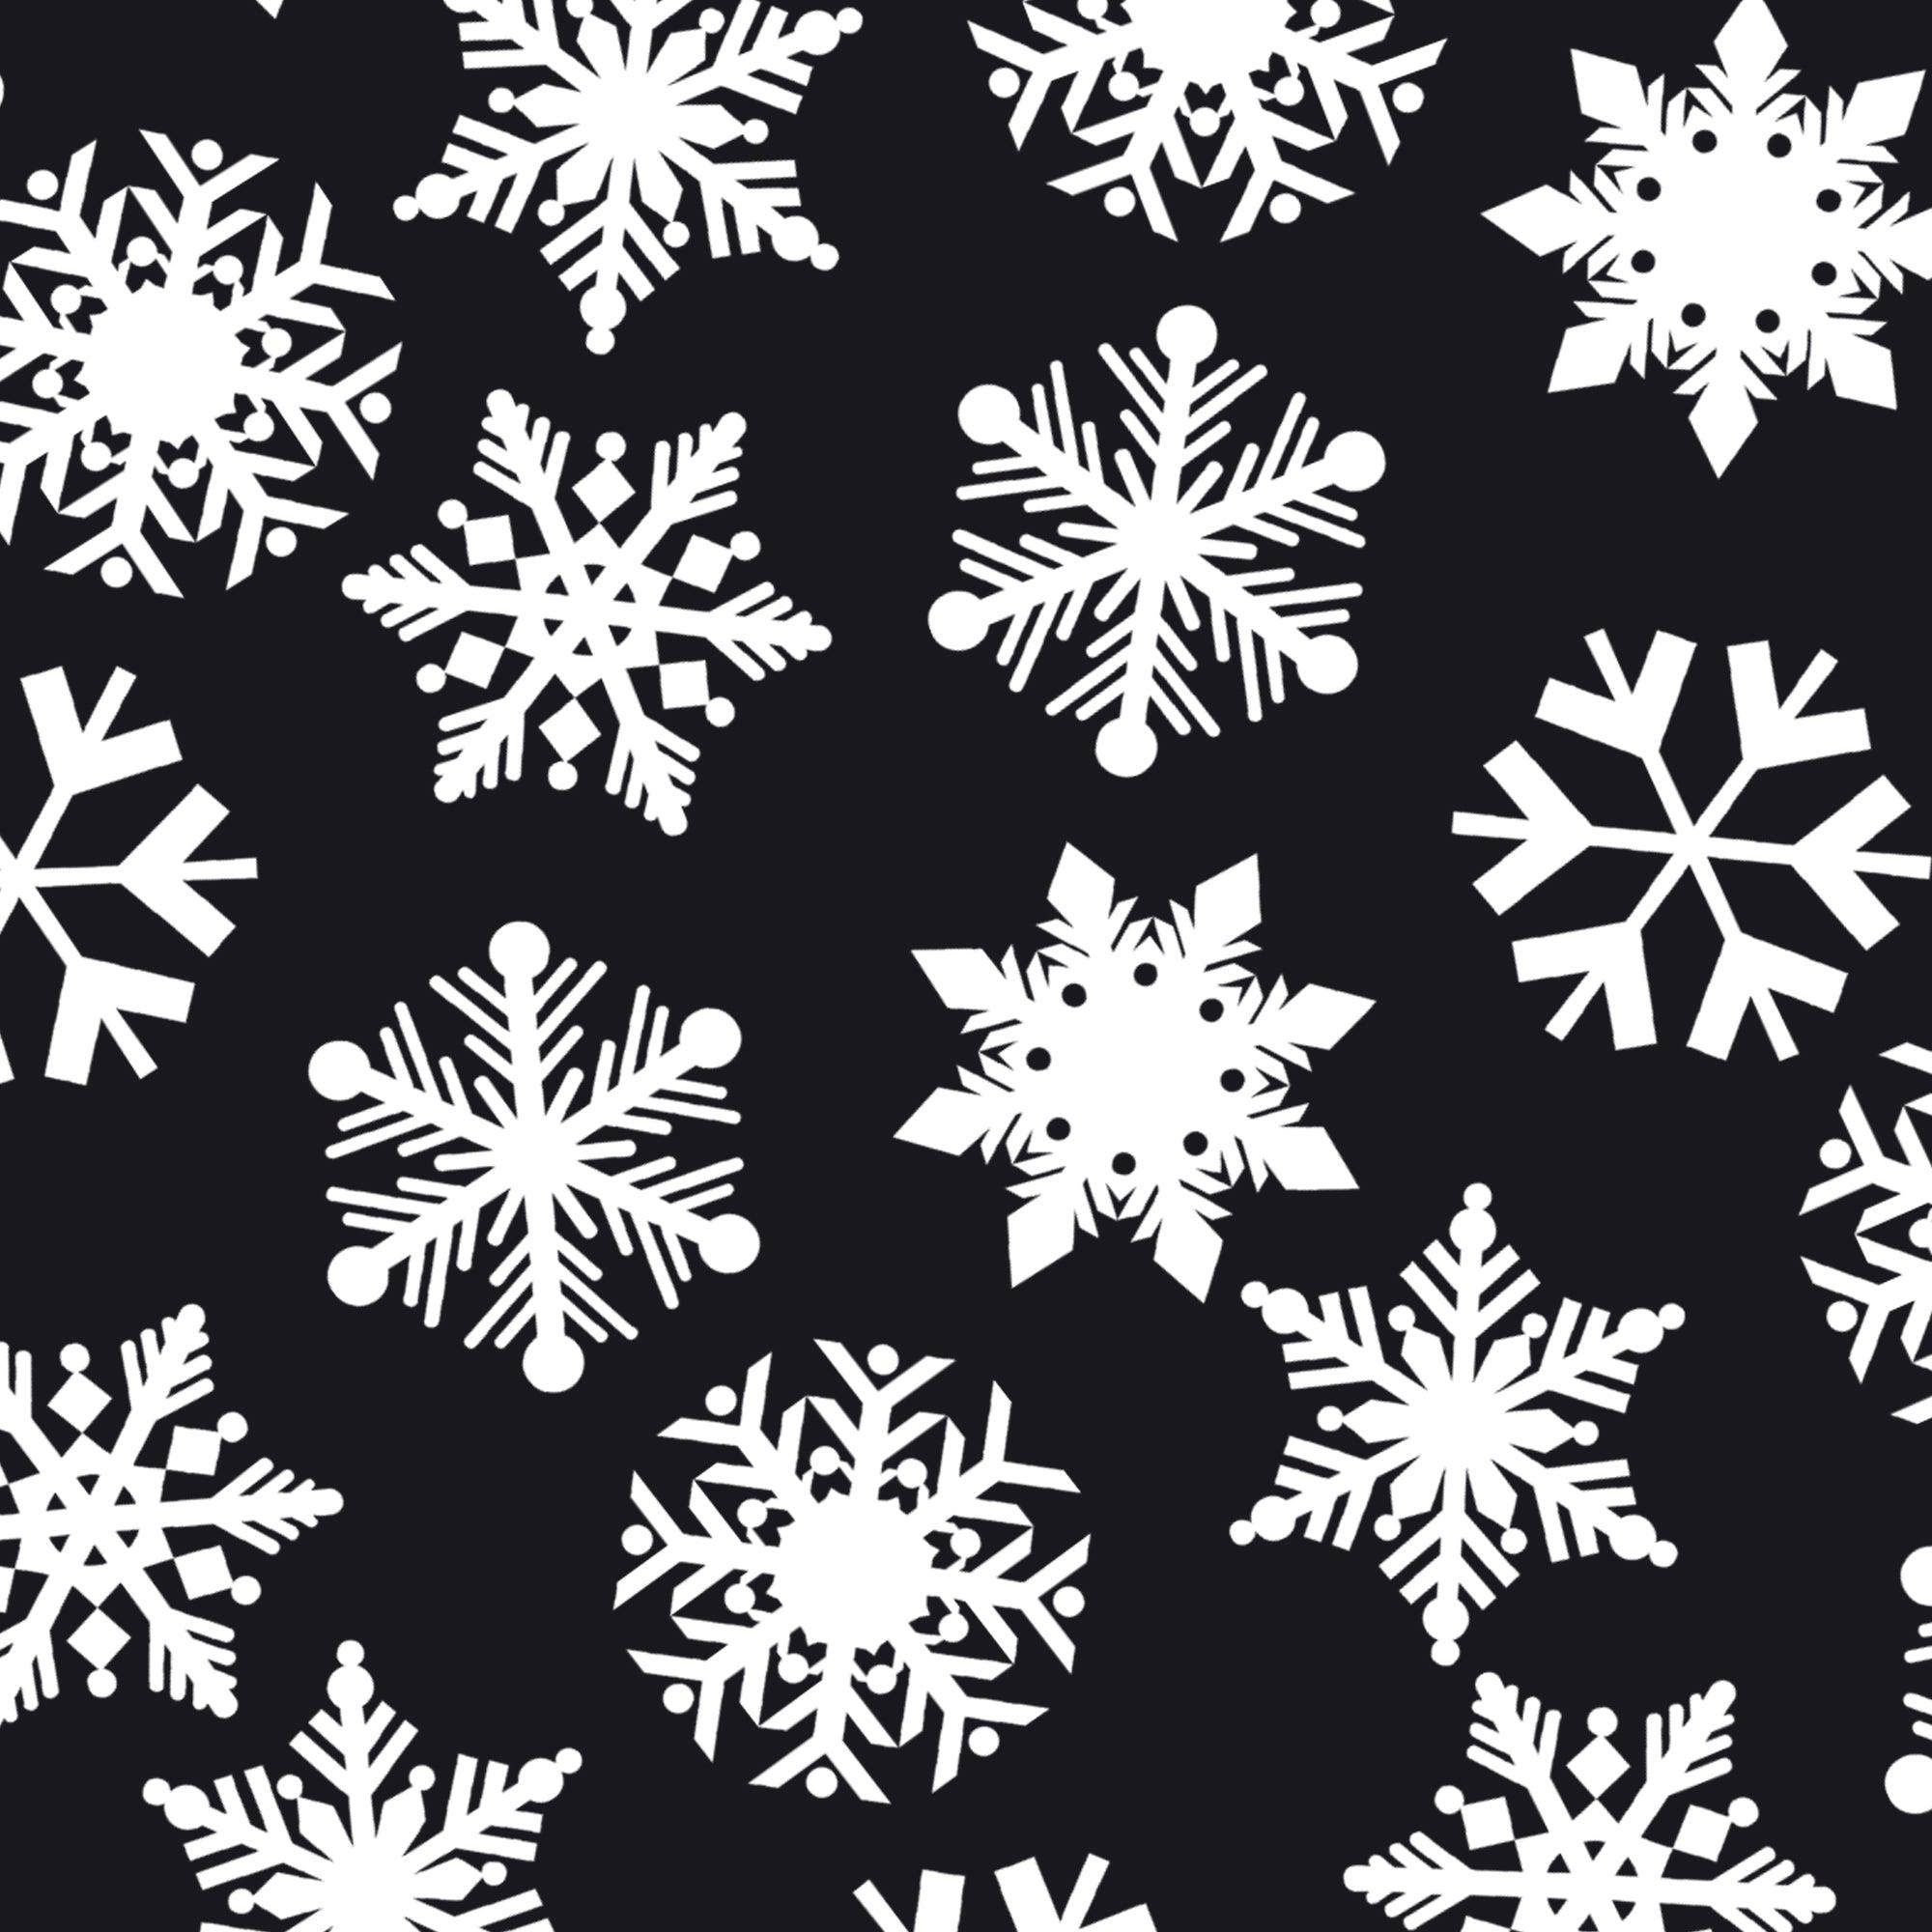 Snowflake Window Stickers: Pack 1 (60 snowflakes @ approx 50mm diameter) Christmas Window Display